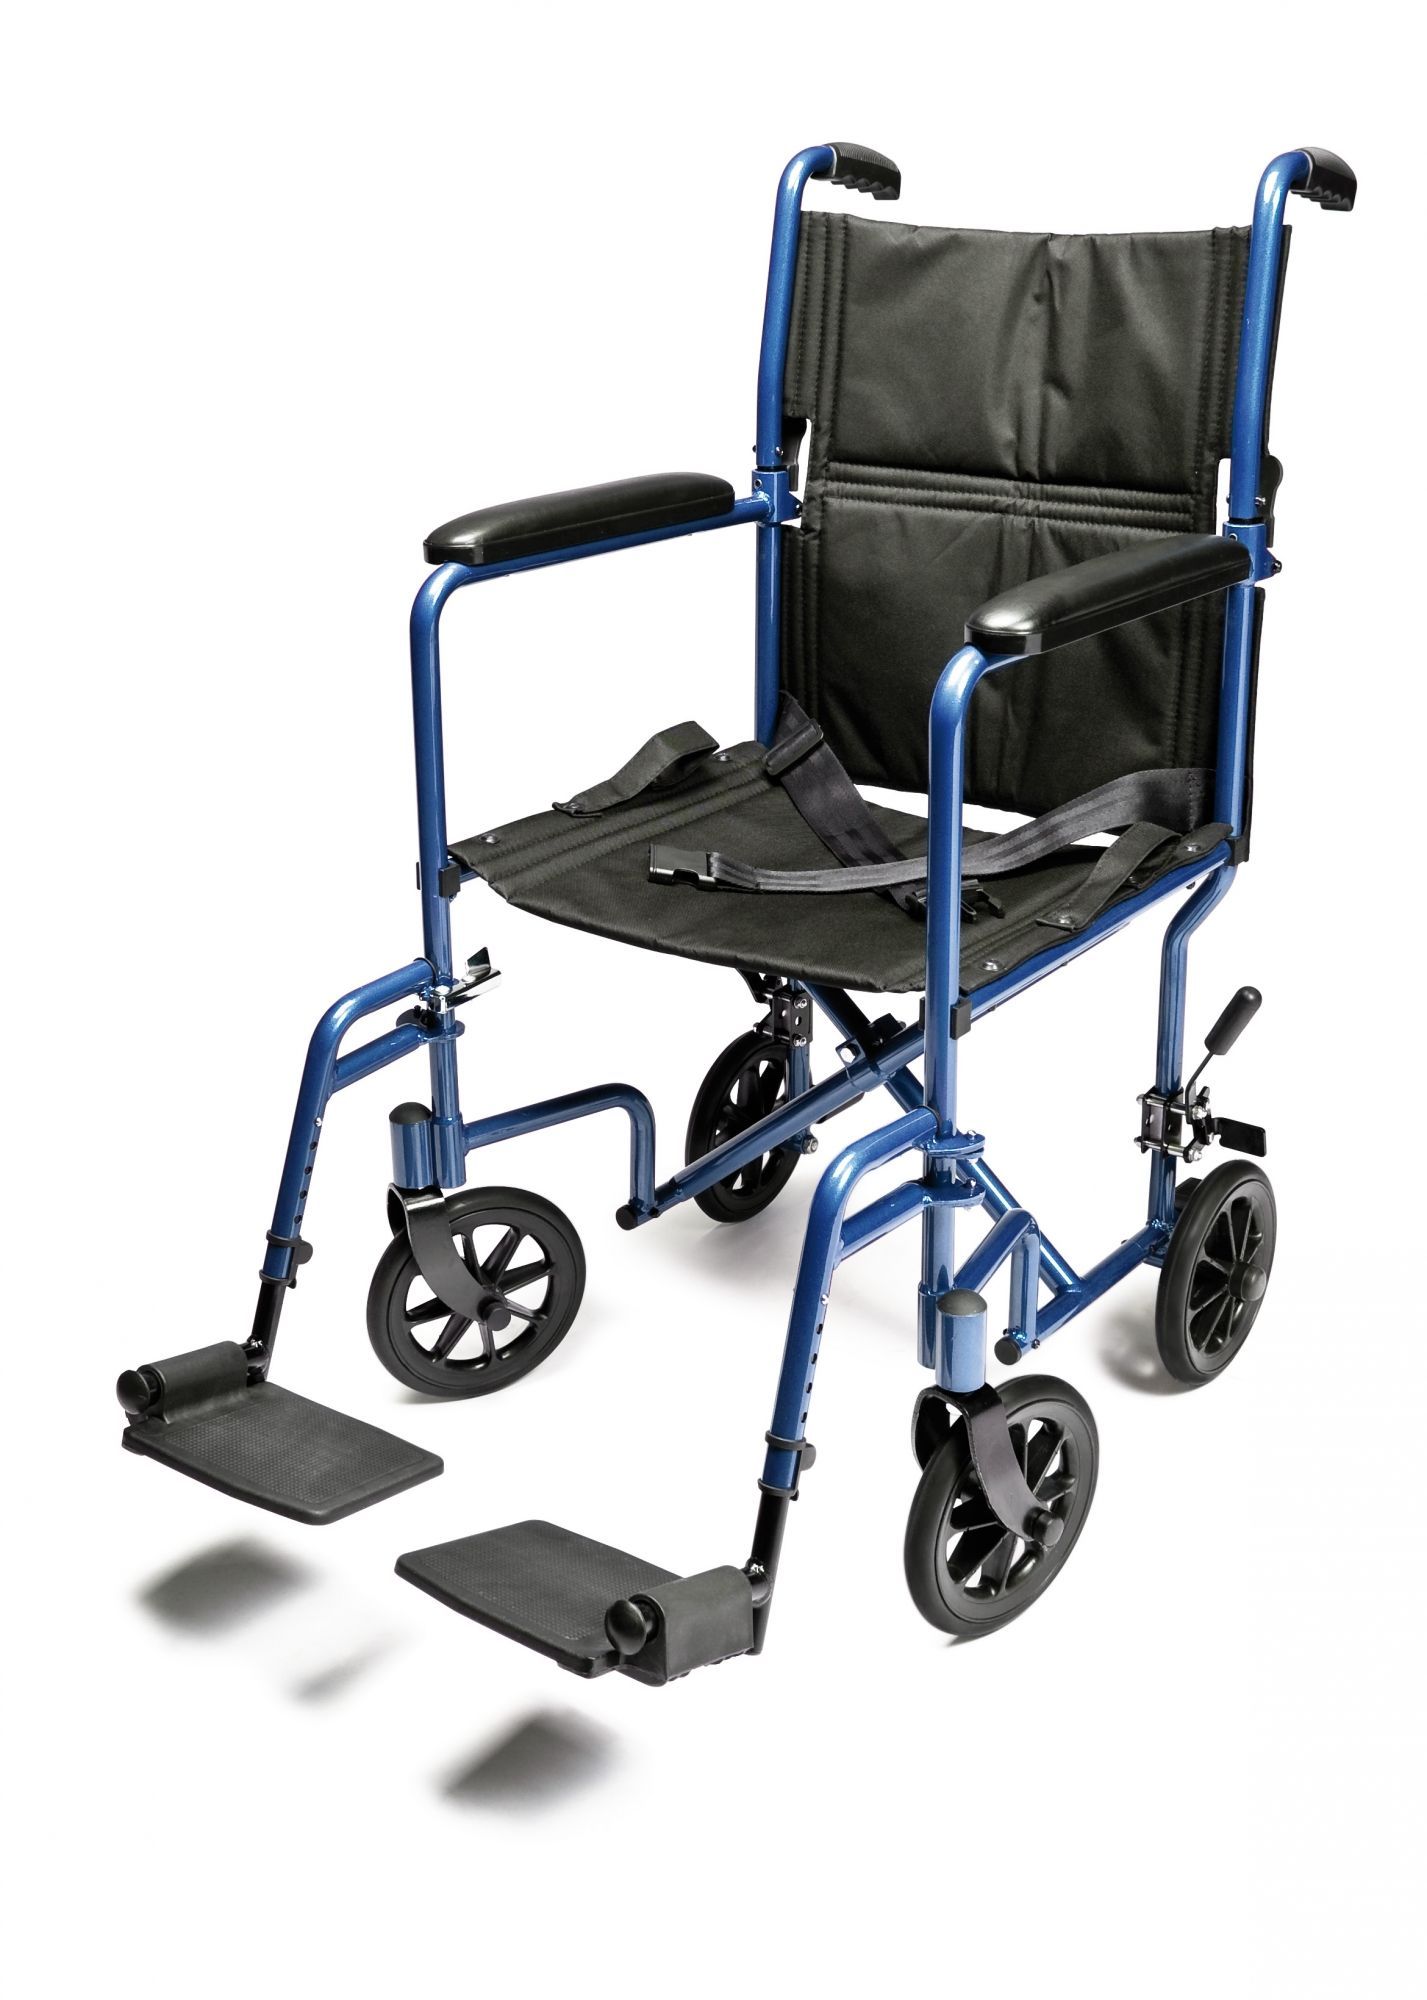 Companion Wheelchair lightweight